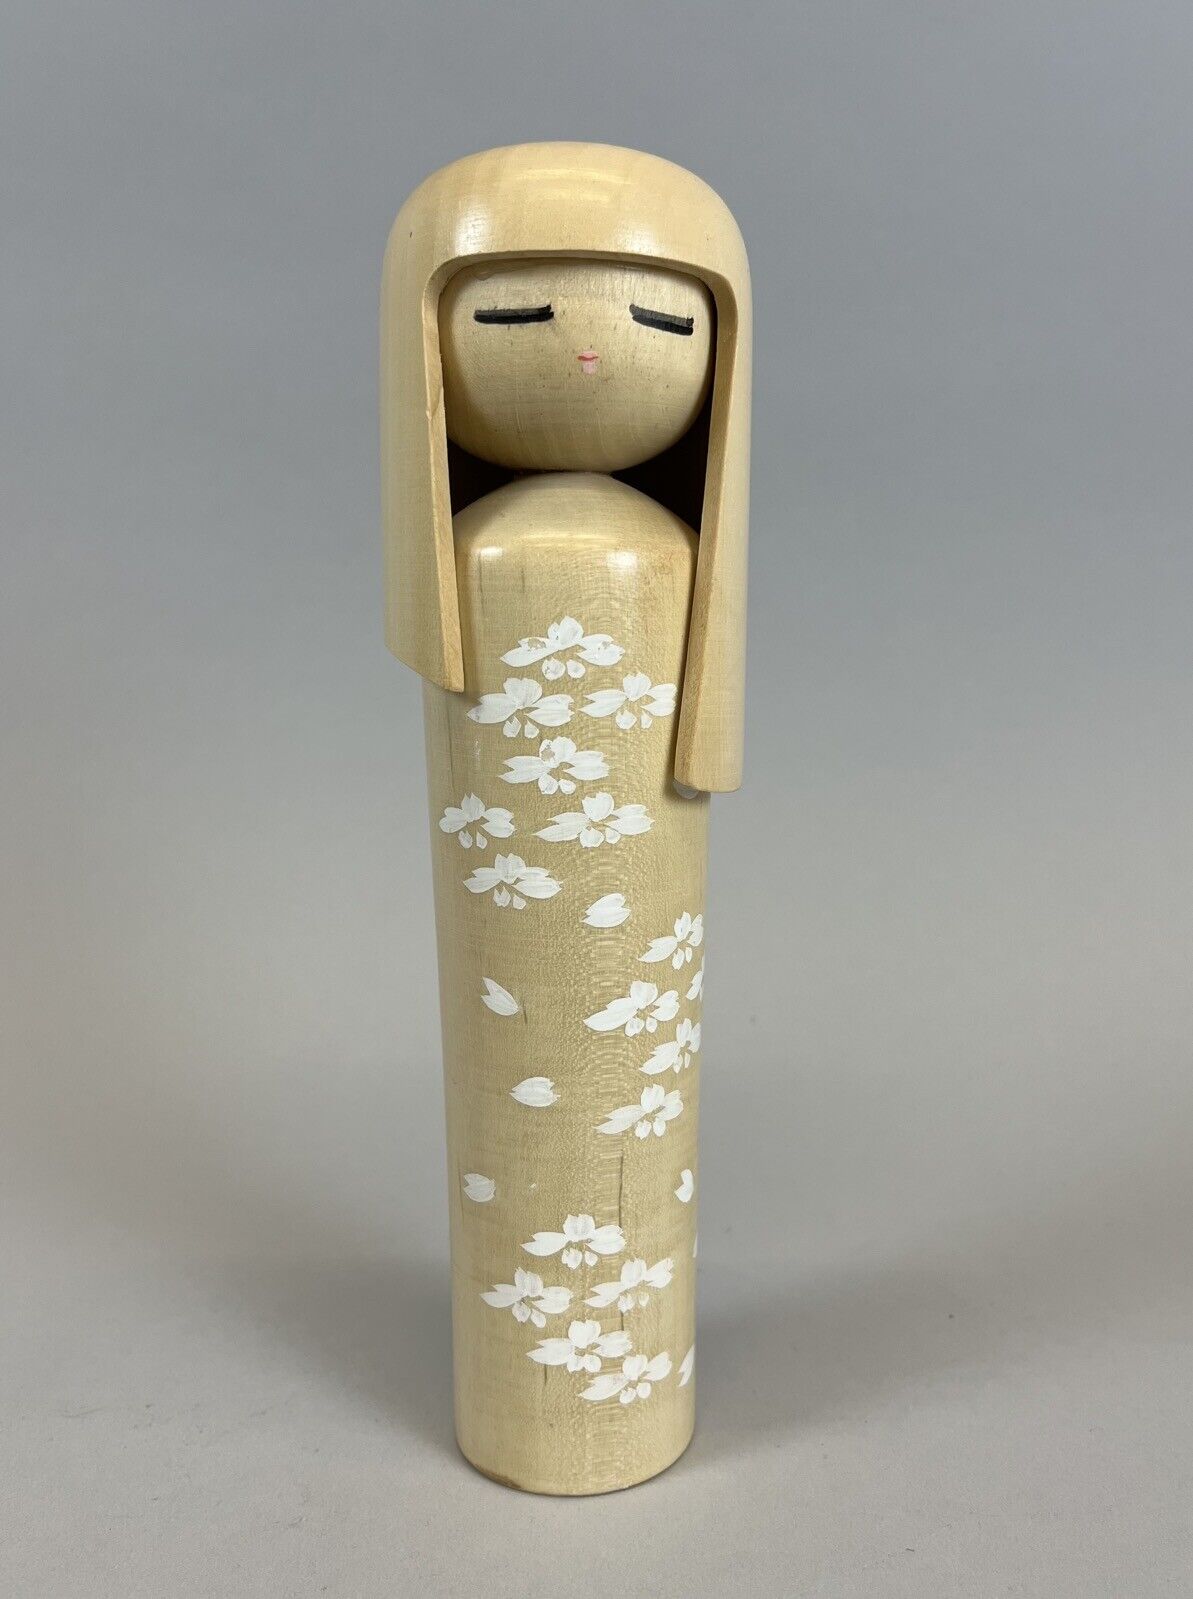 Vintage Japanese Kokeshi doll signed Miyajima Muhitsu made in Japan wooden toy